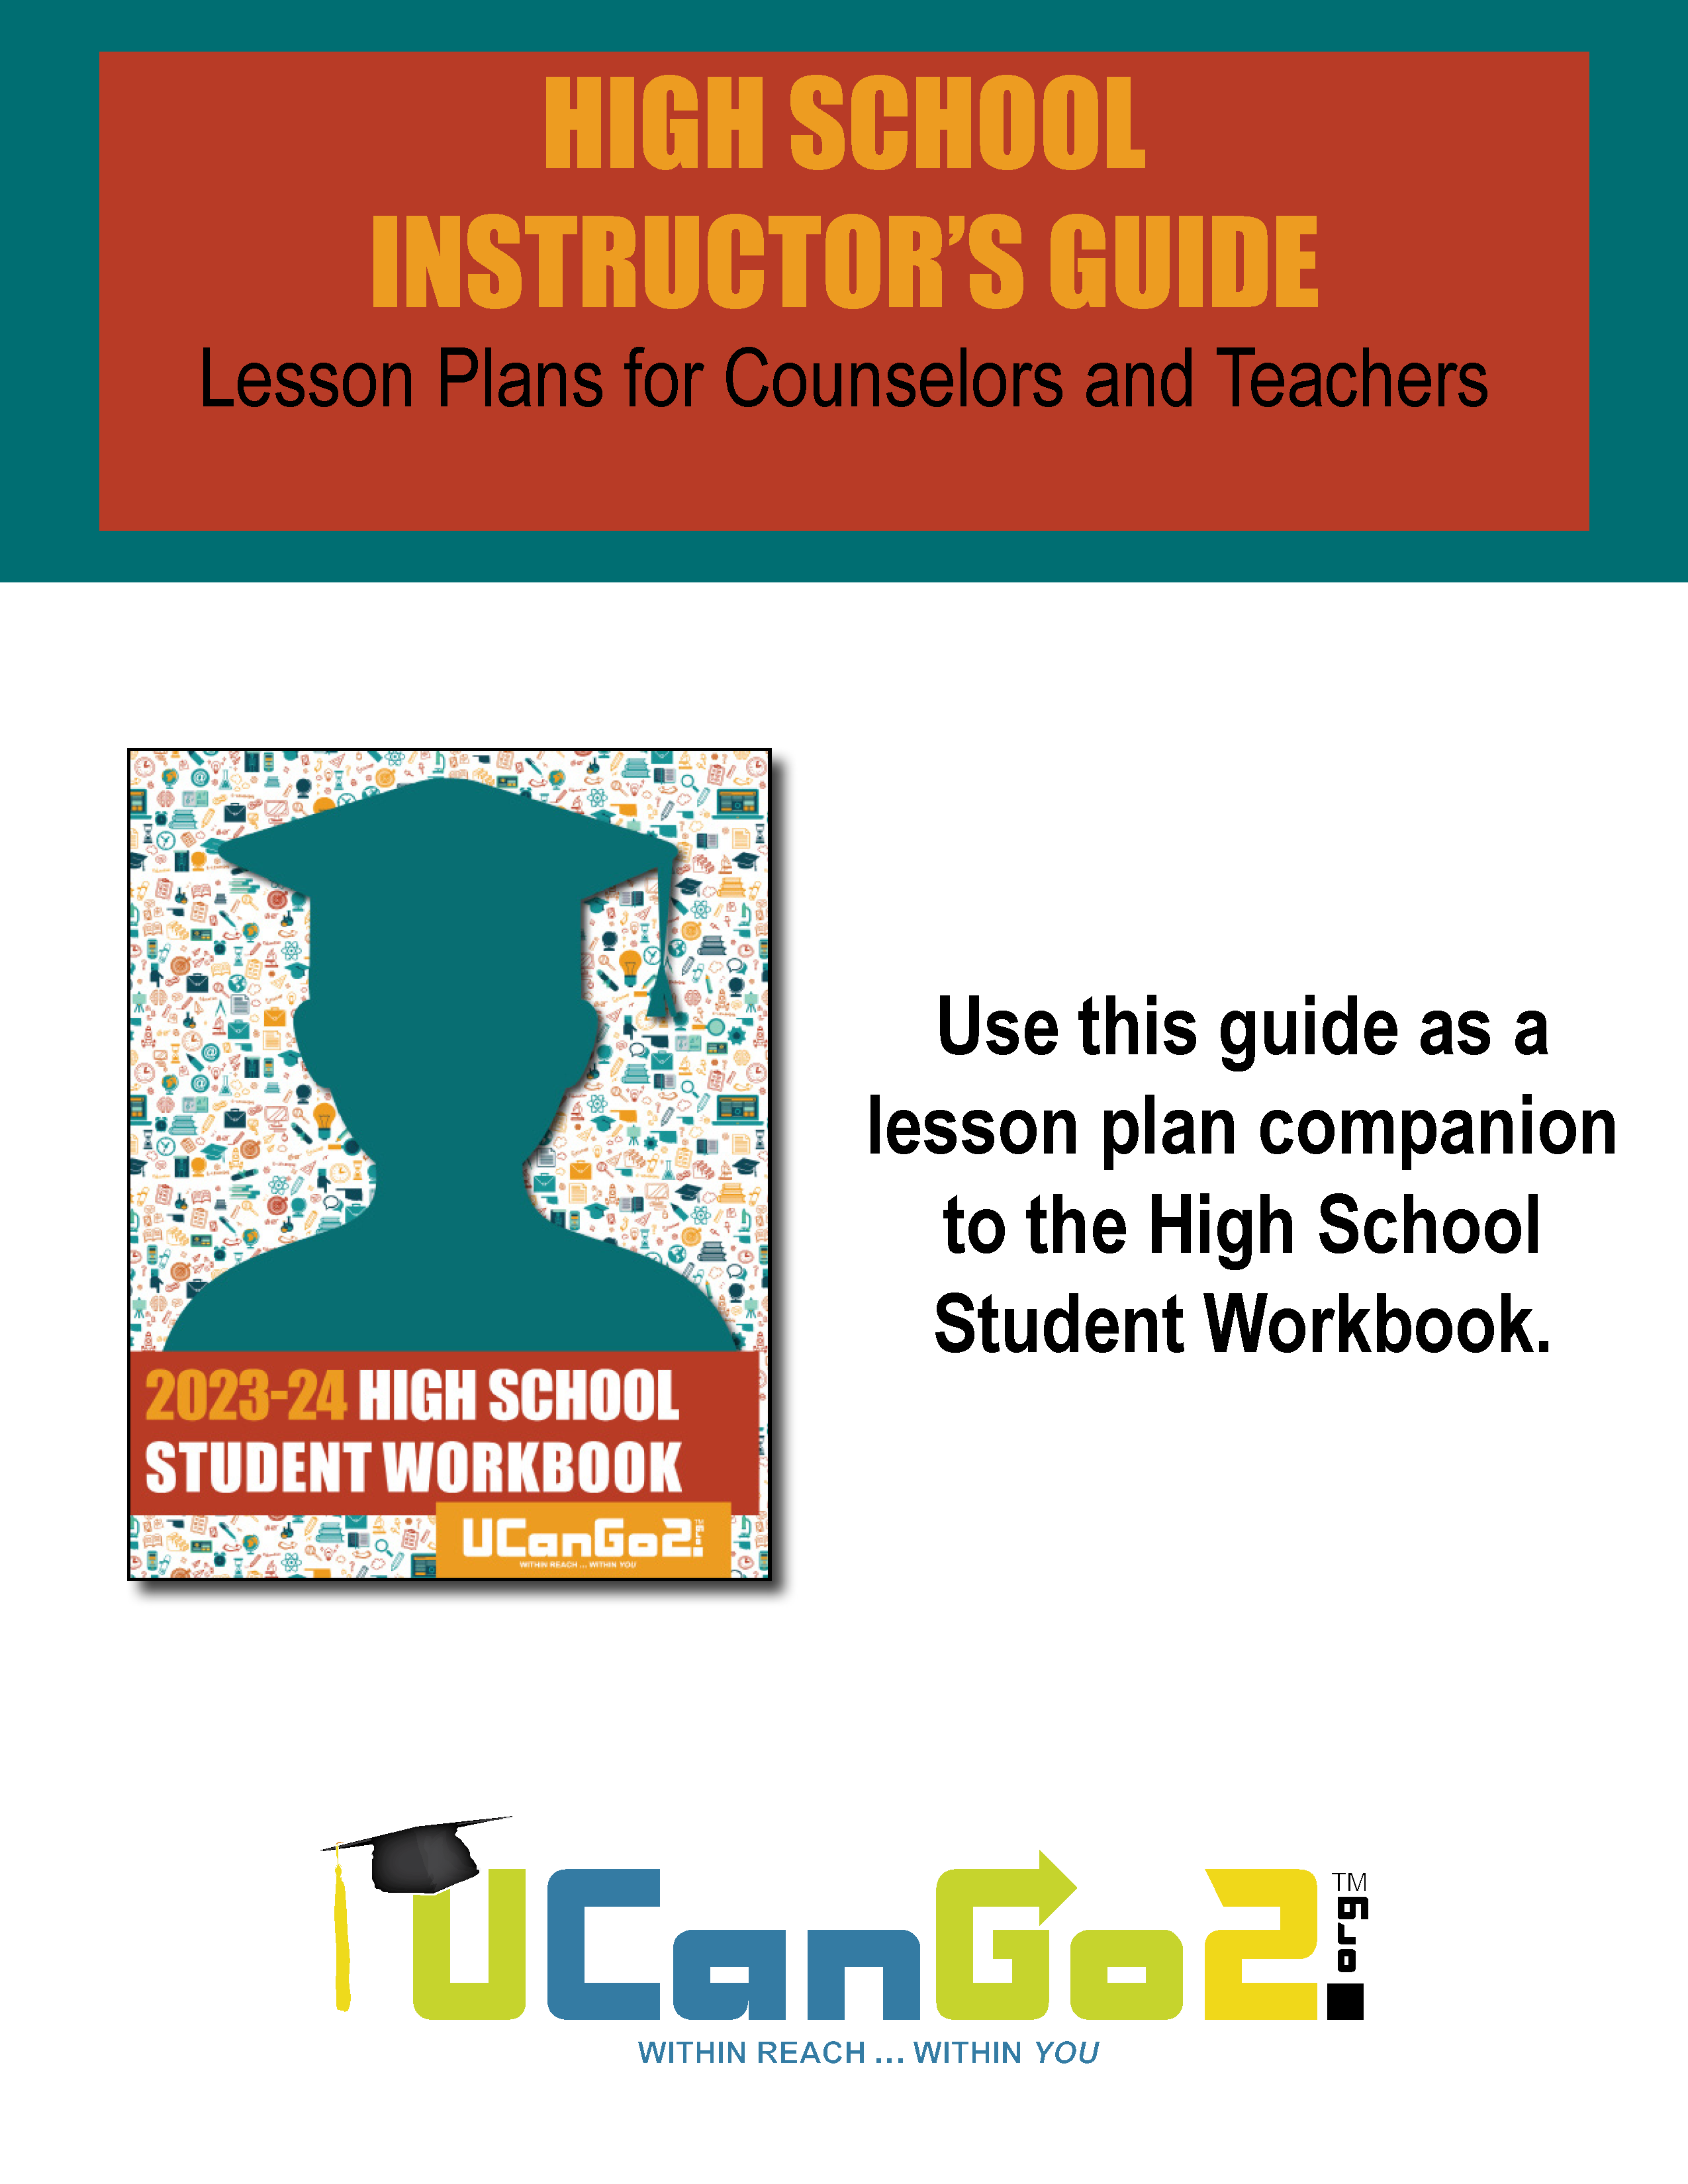 PDF of High School Instructors Guide